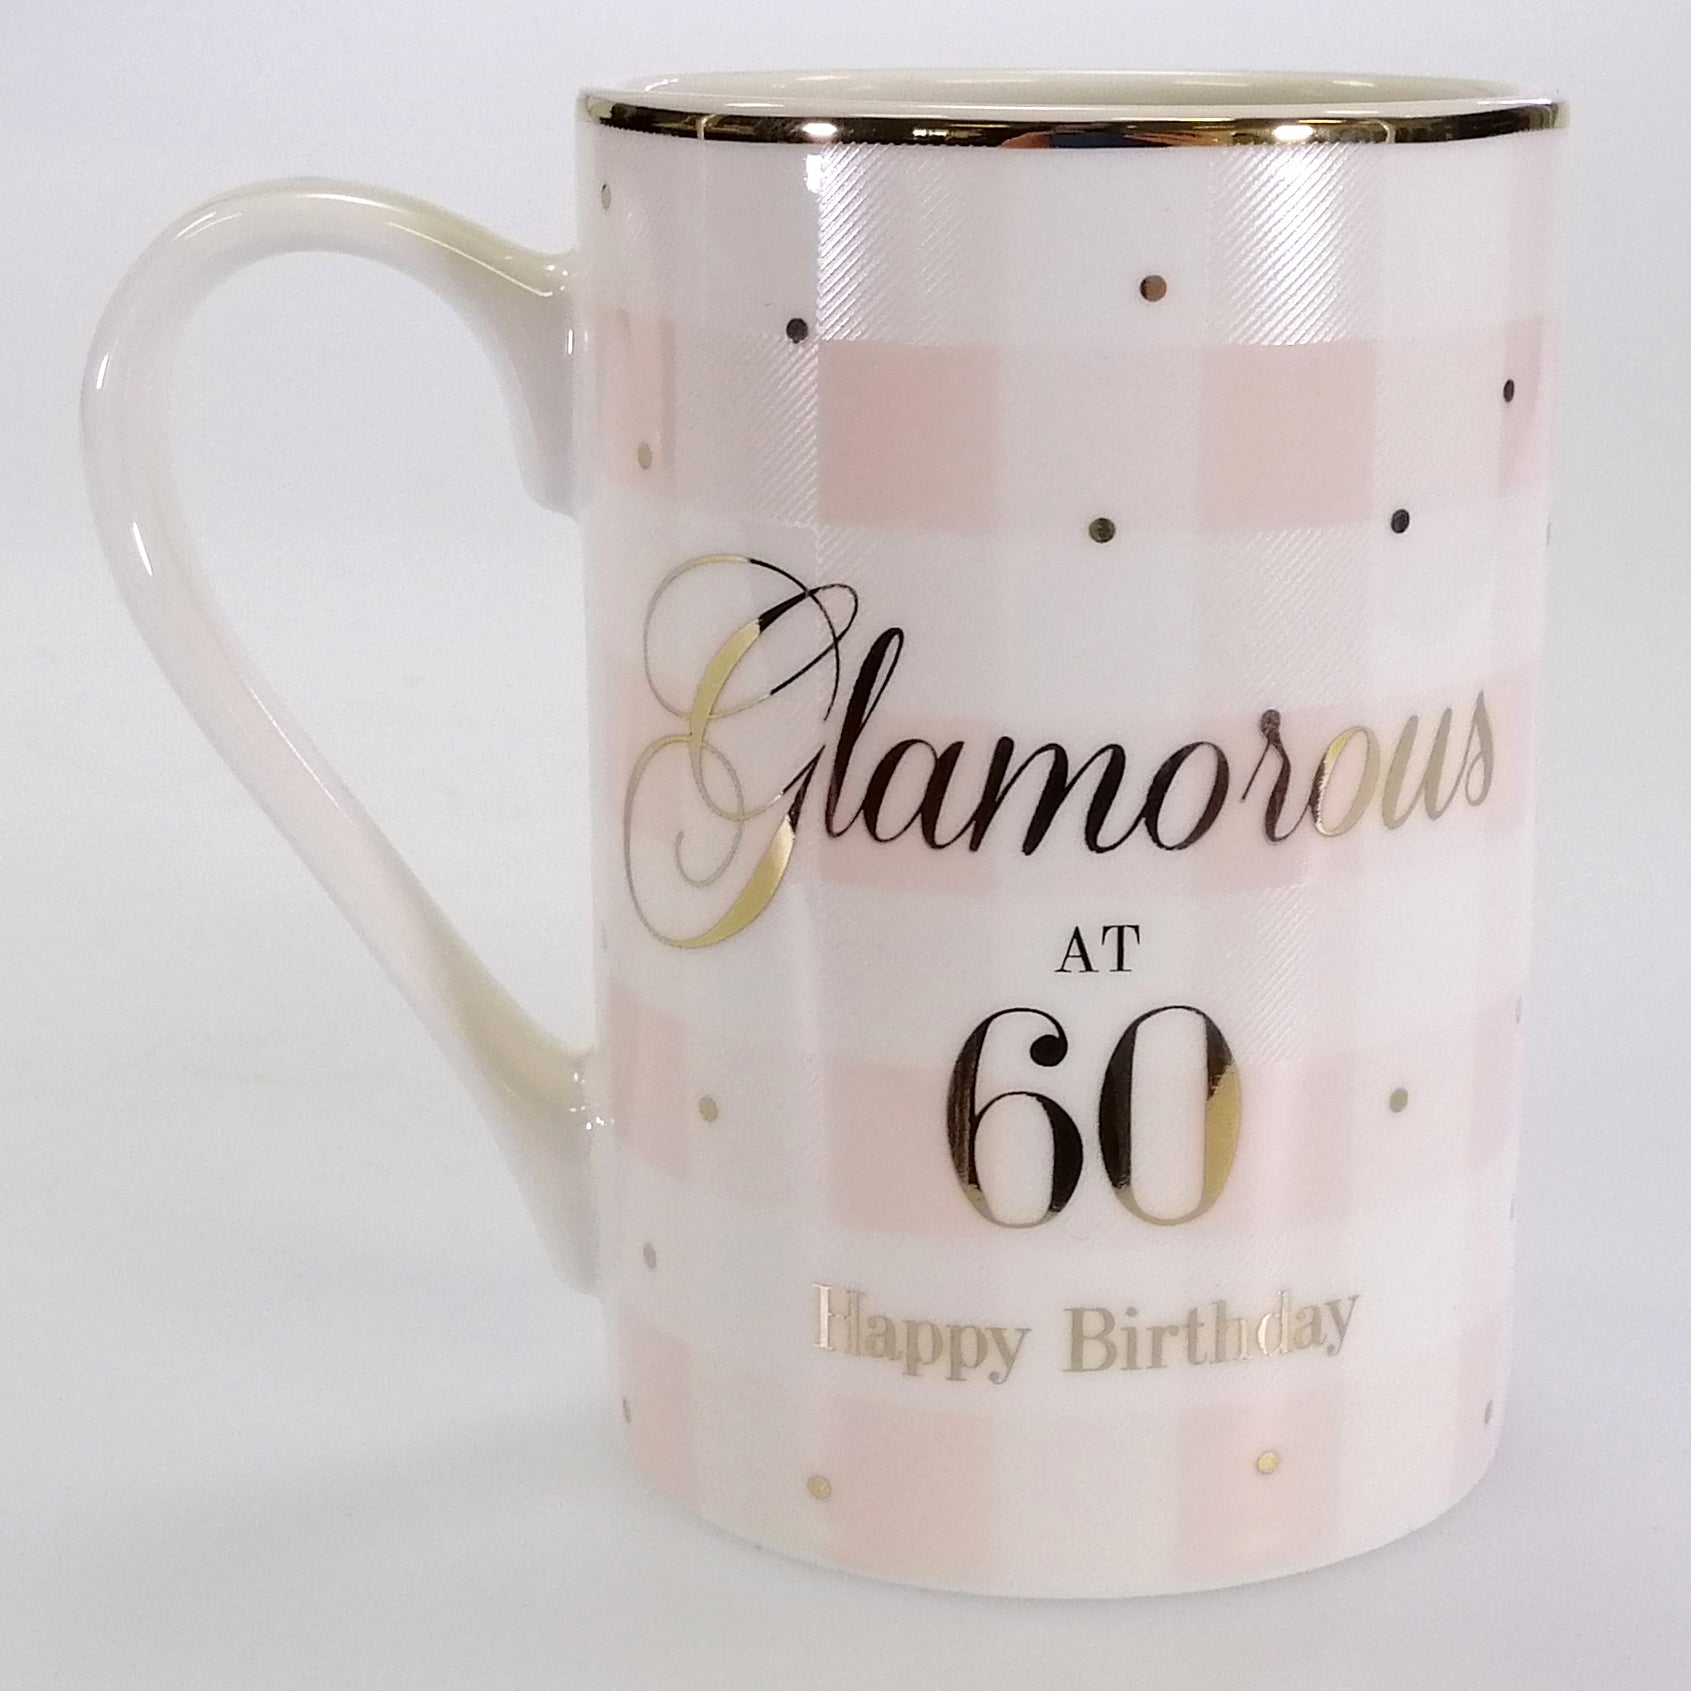 Glamorous at 60' Birthday Mug